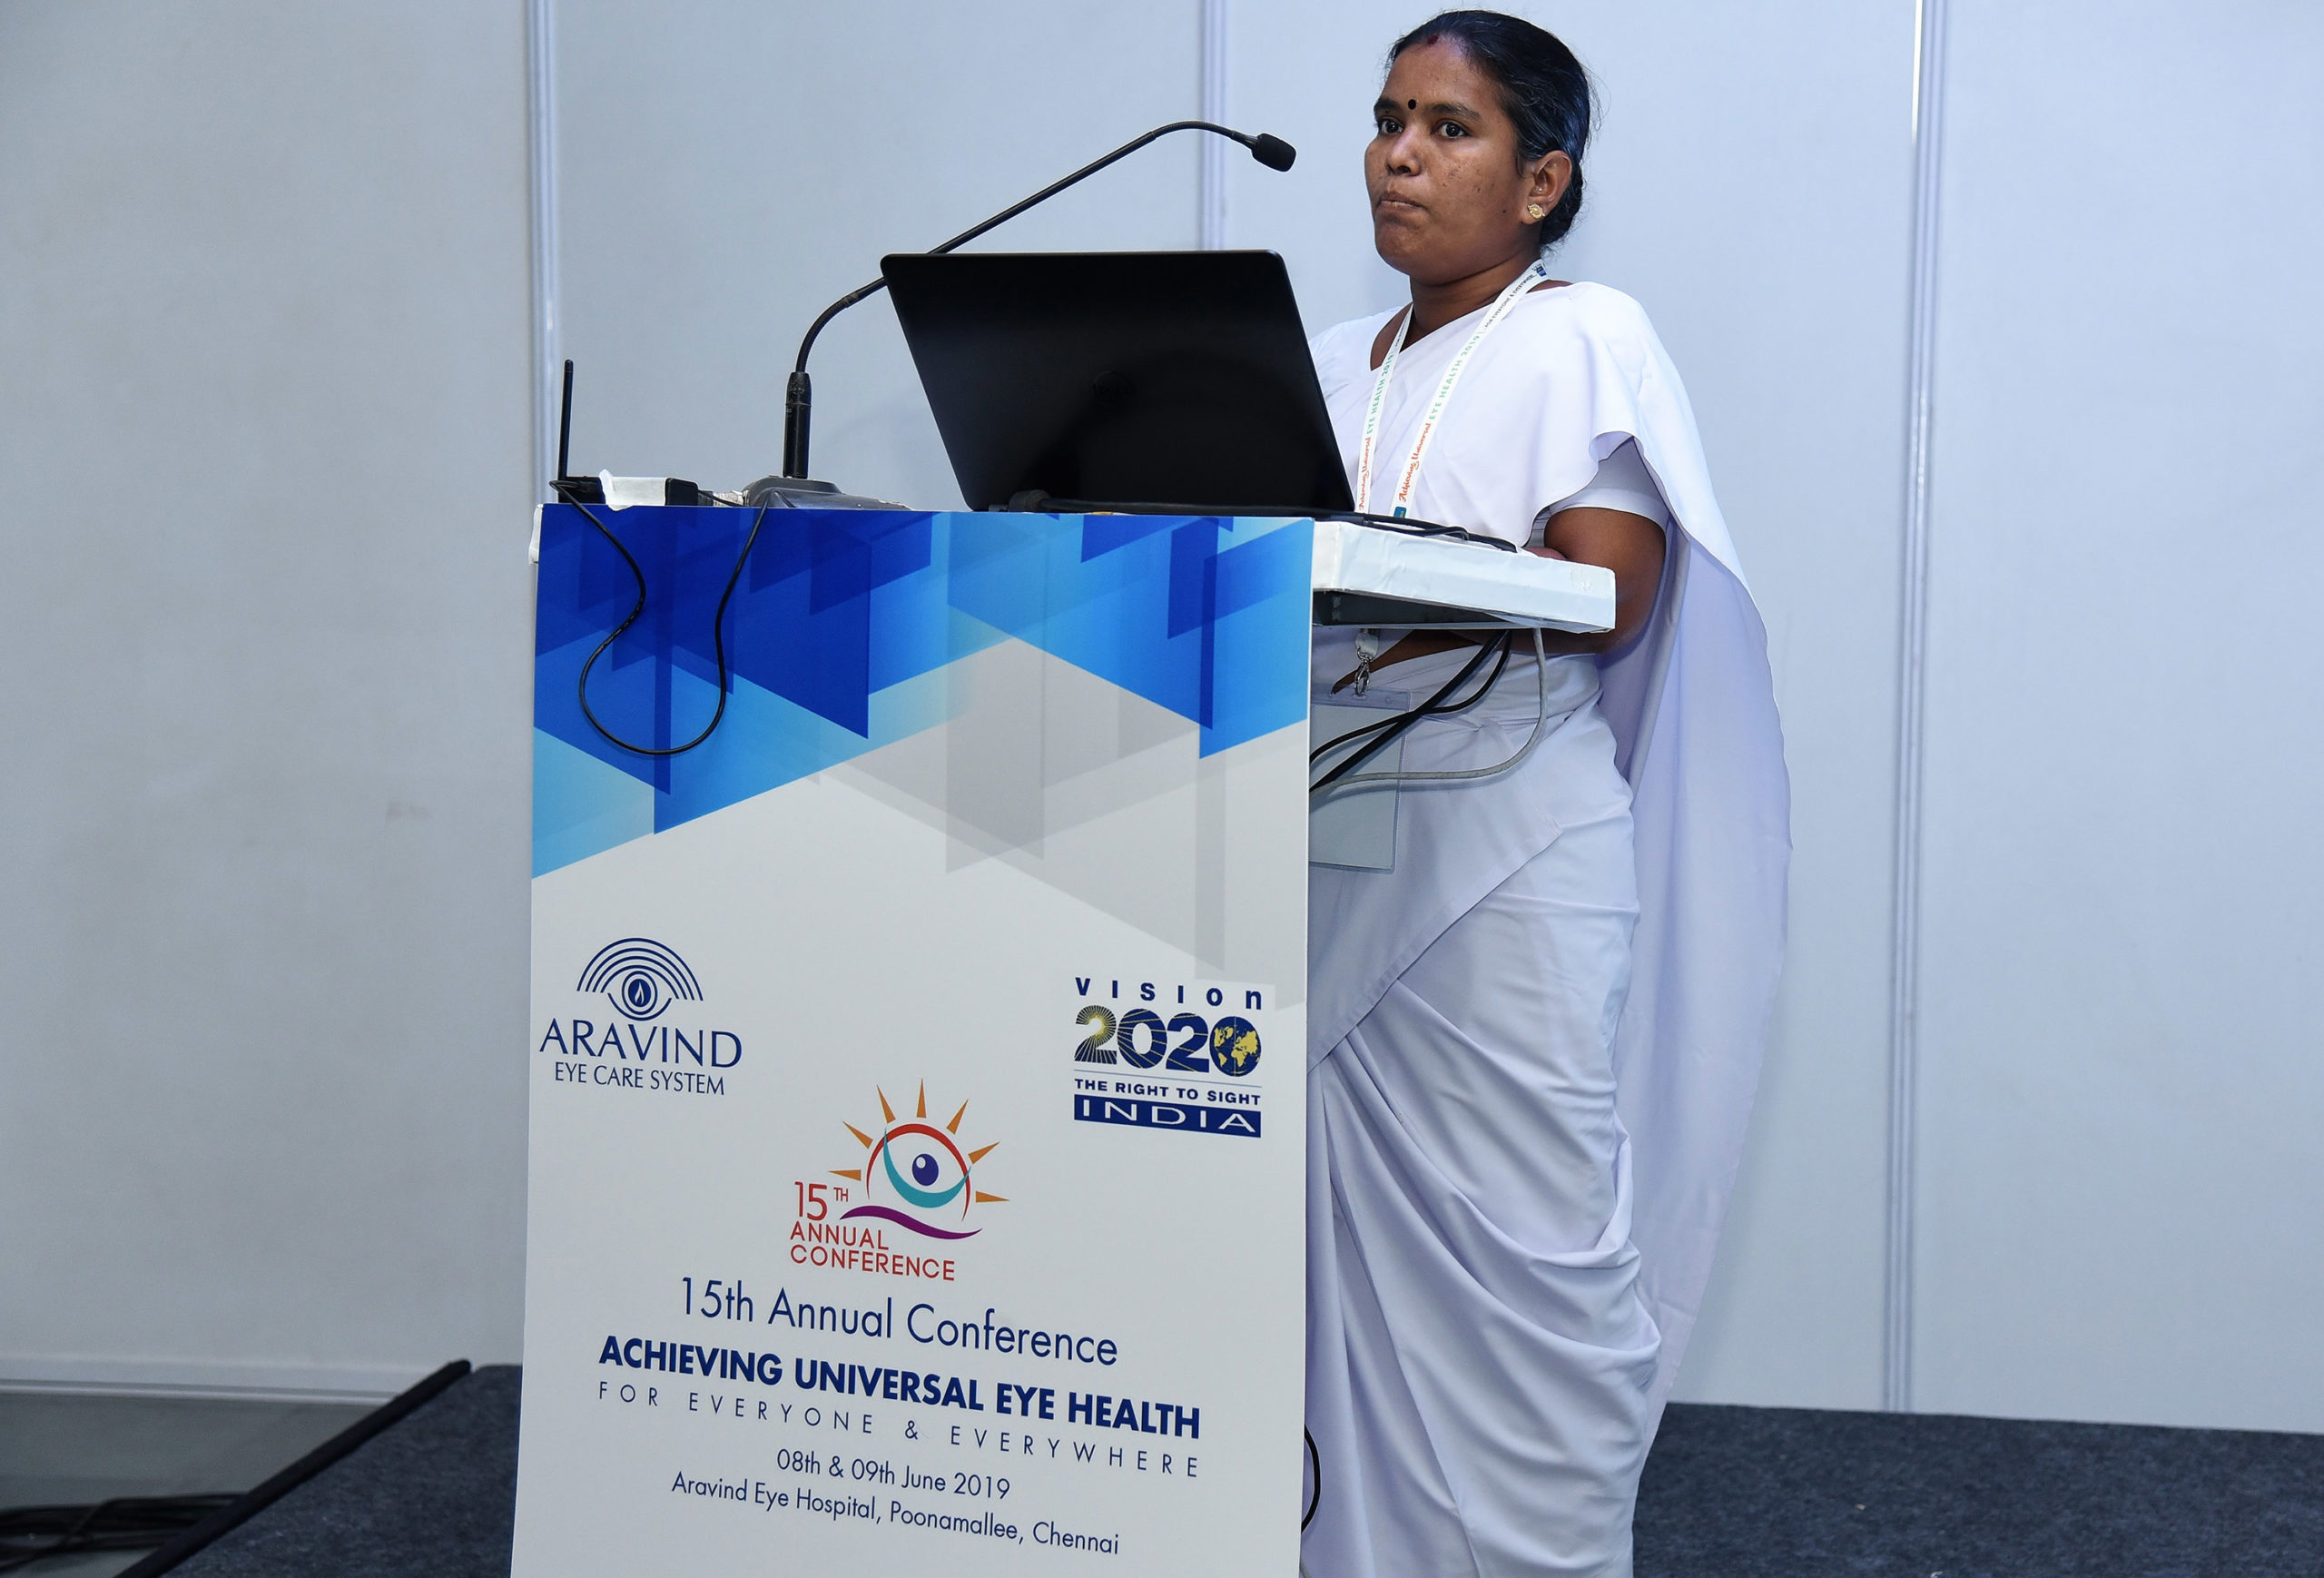 AOP presenting her paper at a national level conference. Photo Credit: Rajkumar, Aravind Eye Care System